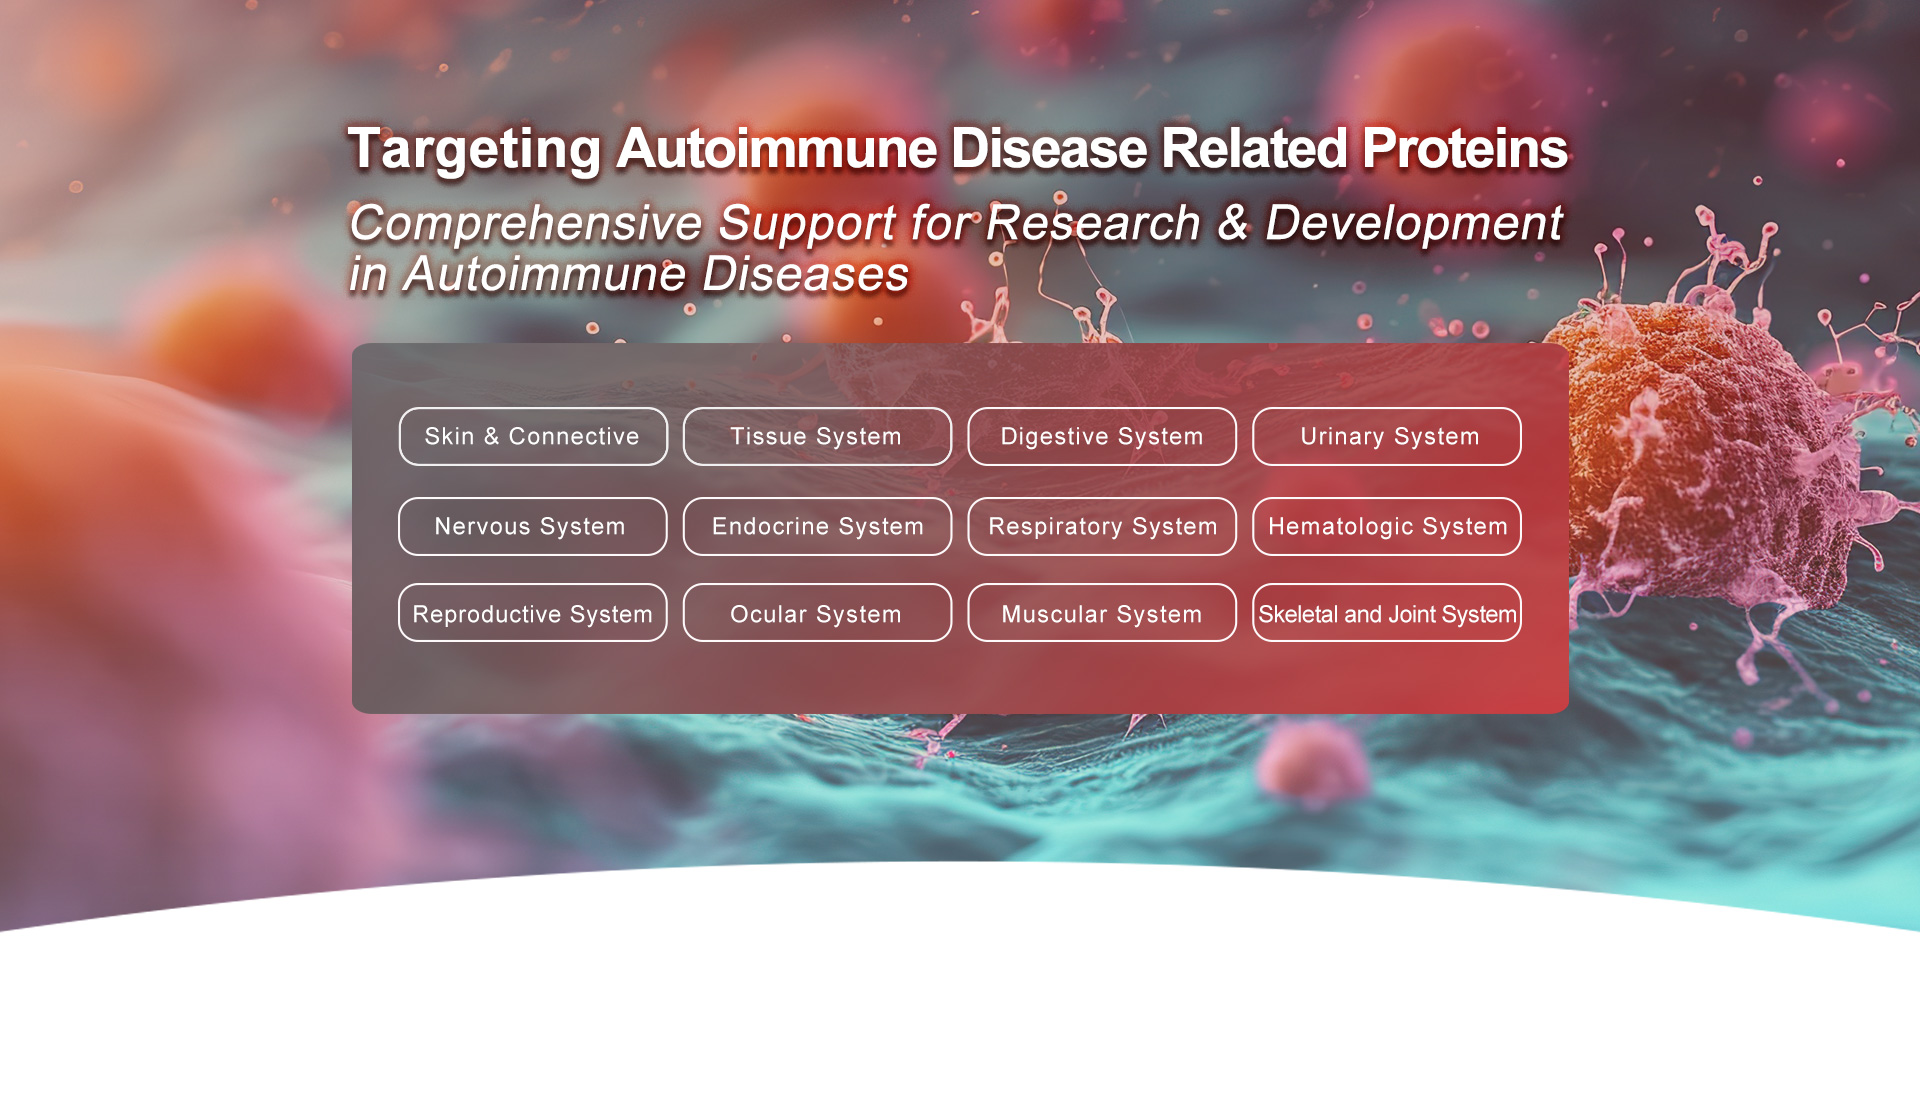 Novel Drug Development Opportunities in Autoimmune Diseases